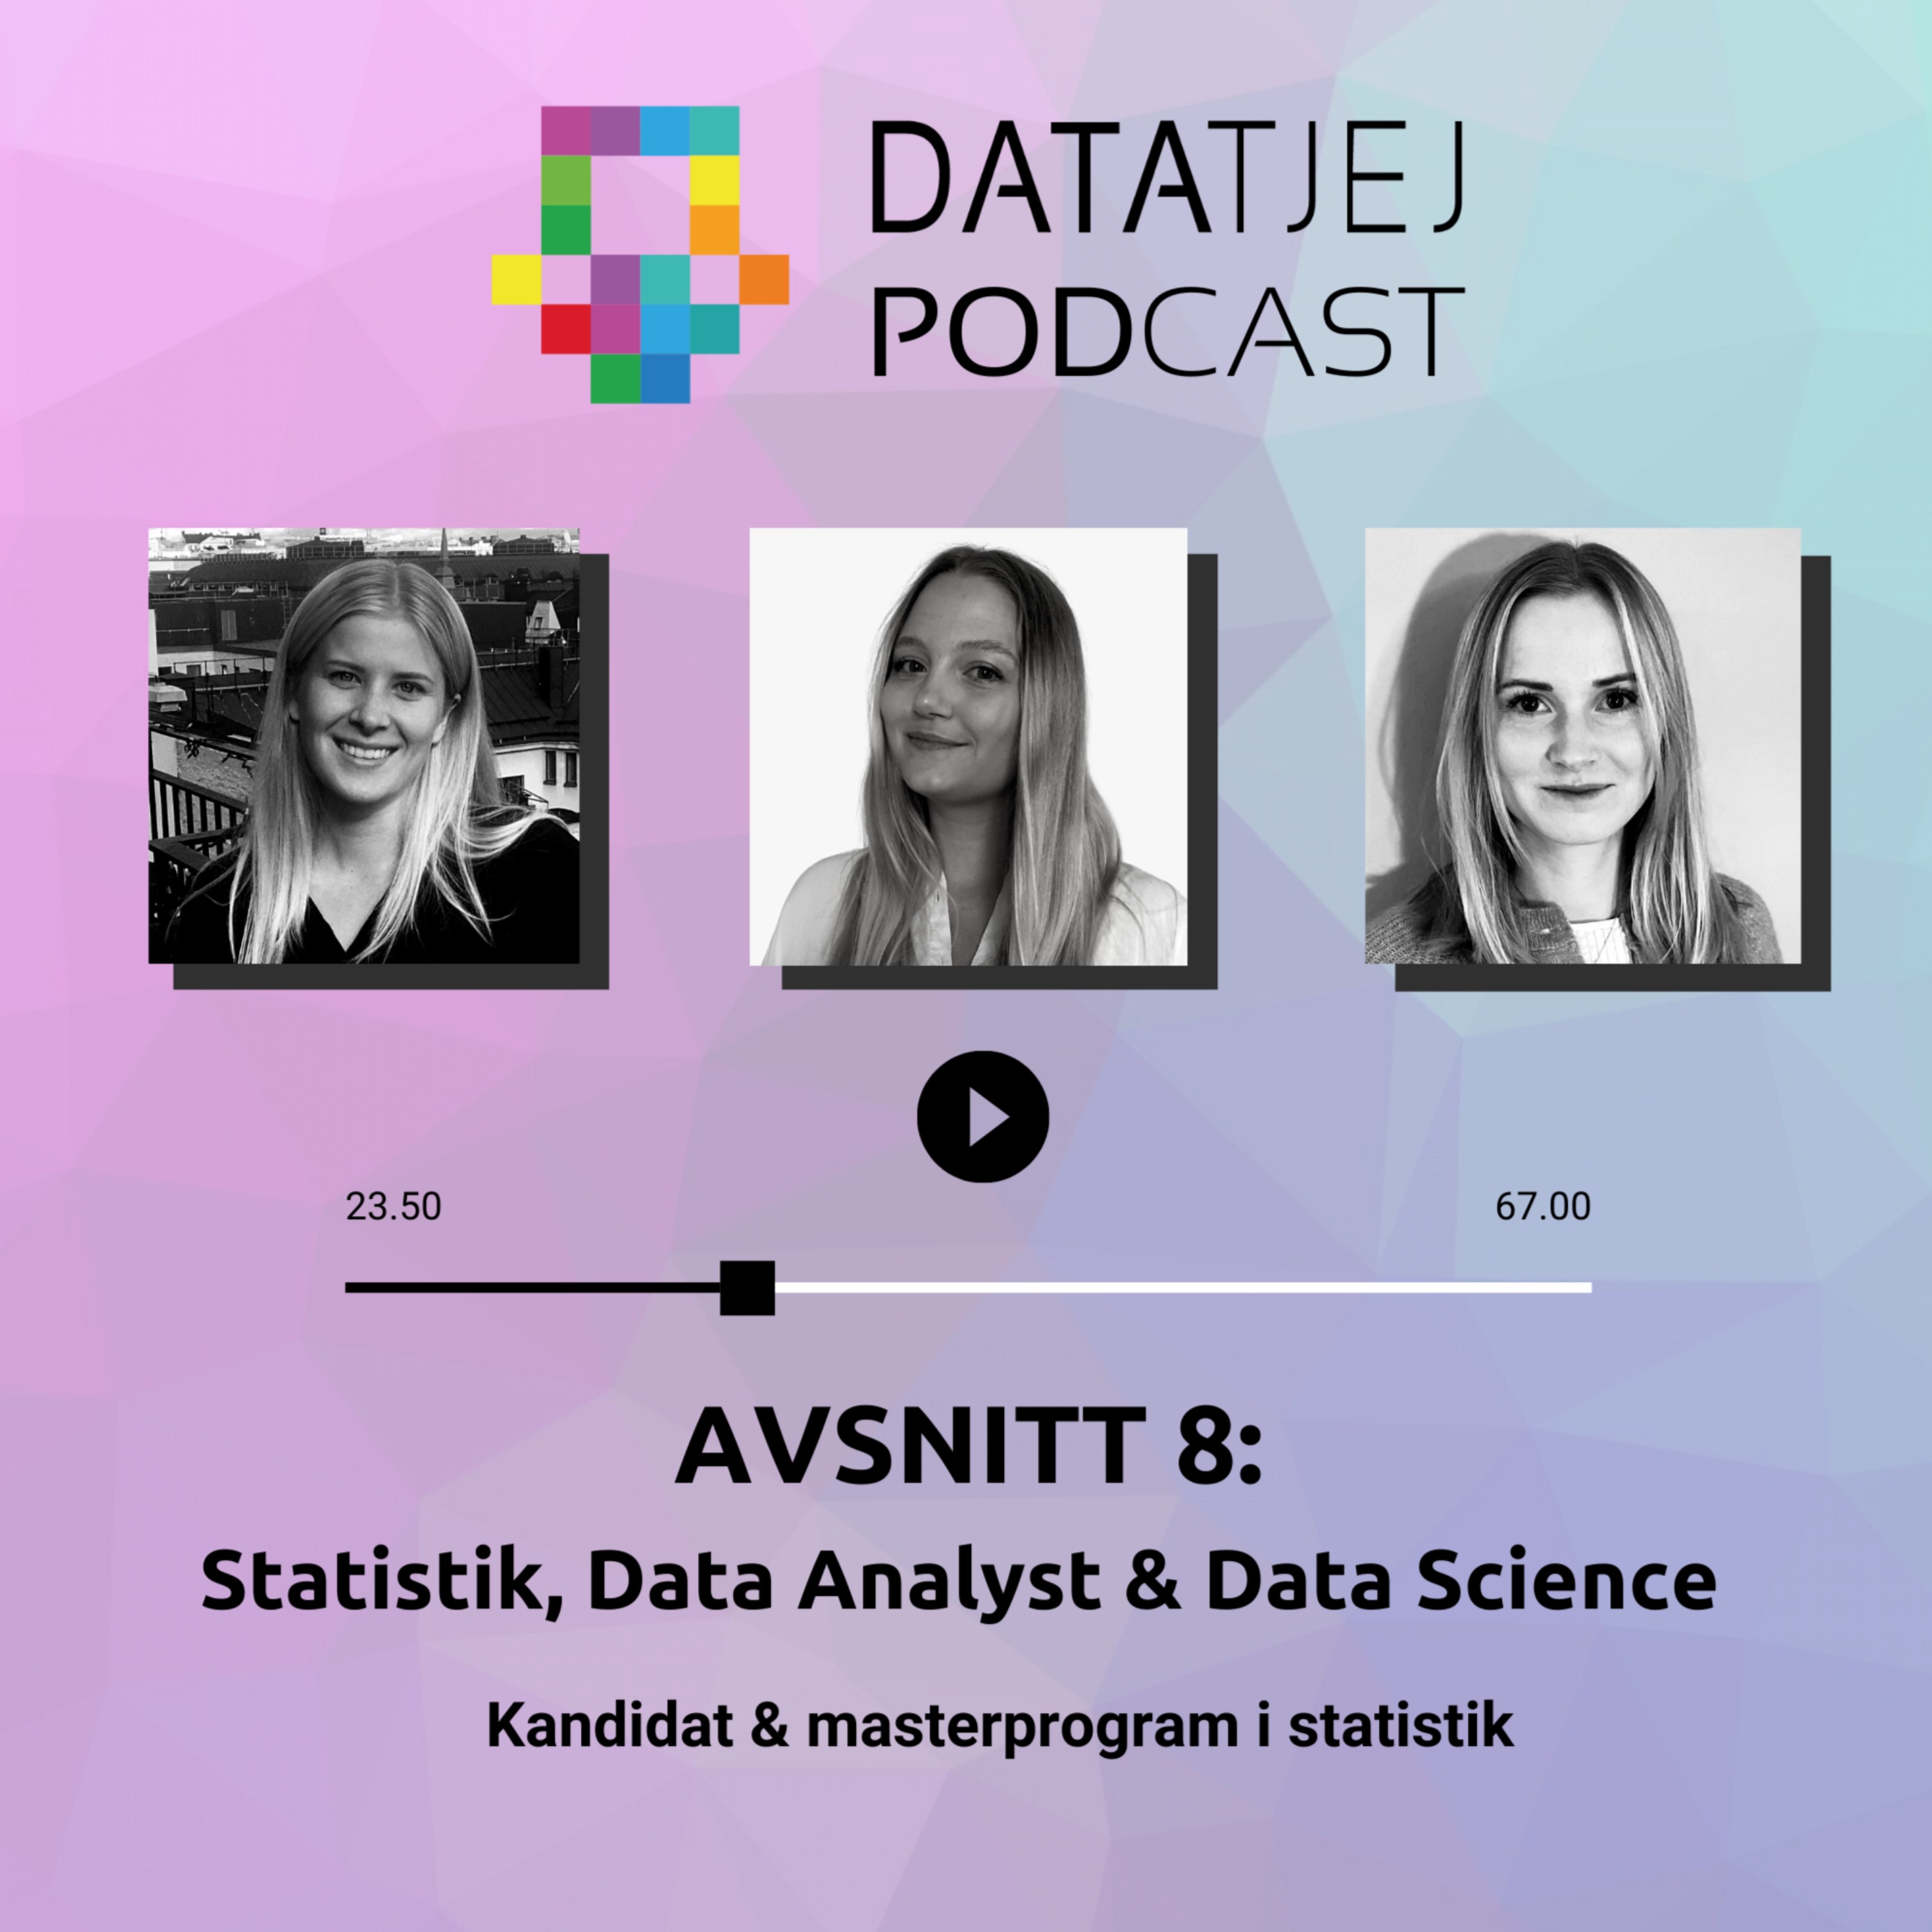 Statistik, Data Analyst & Data Science (Kandidat & masterprogram i statistik)